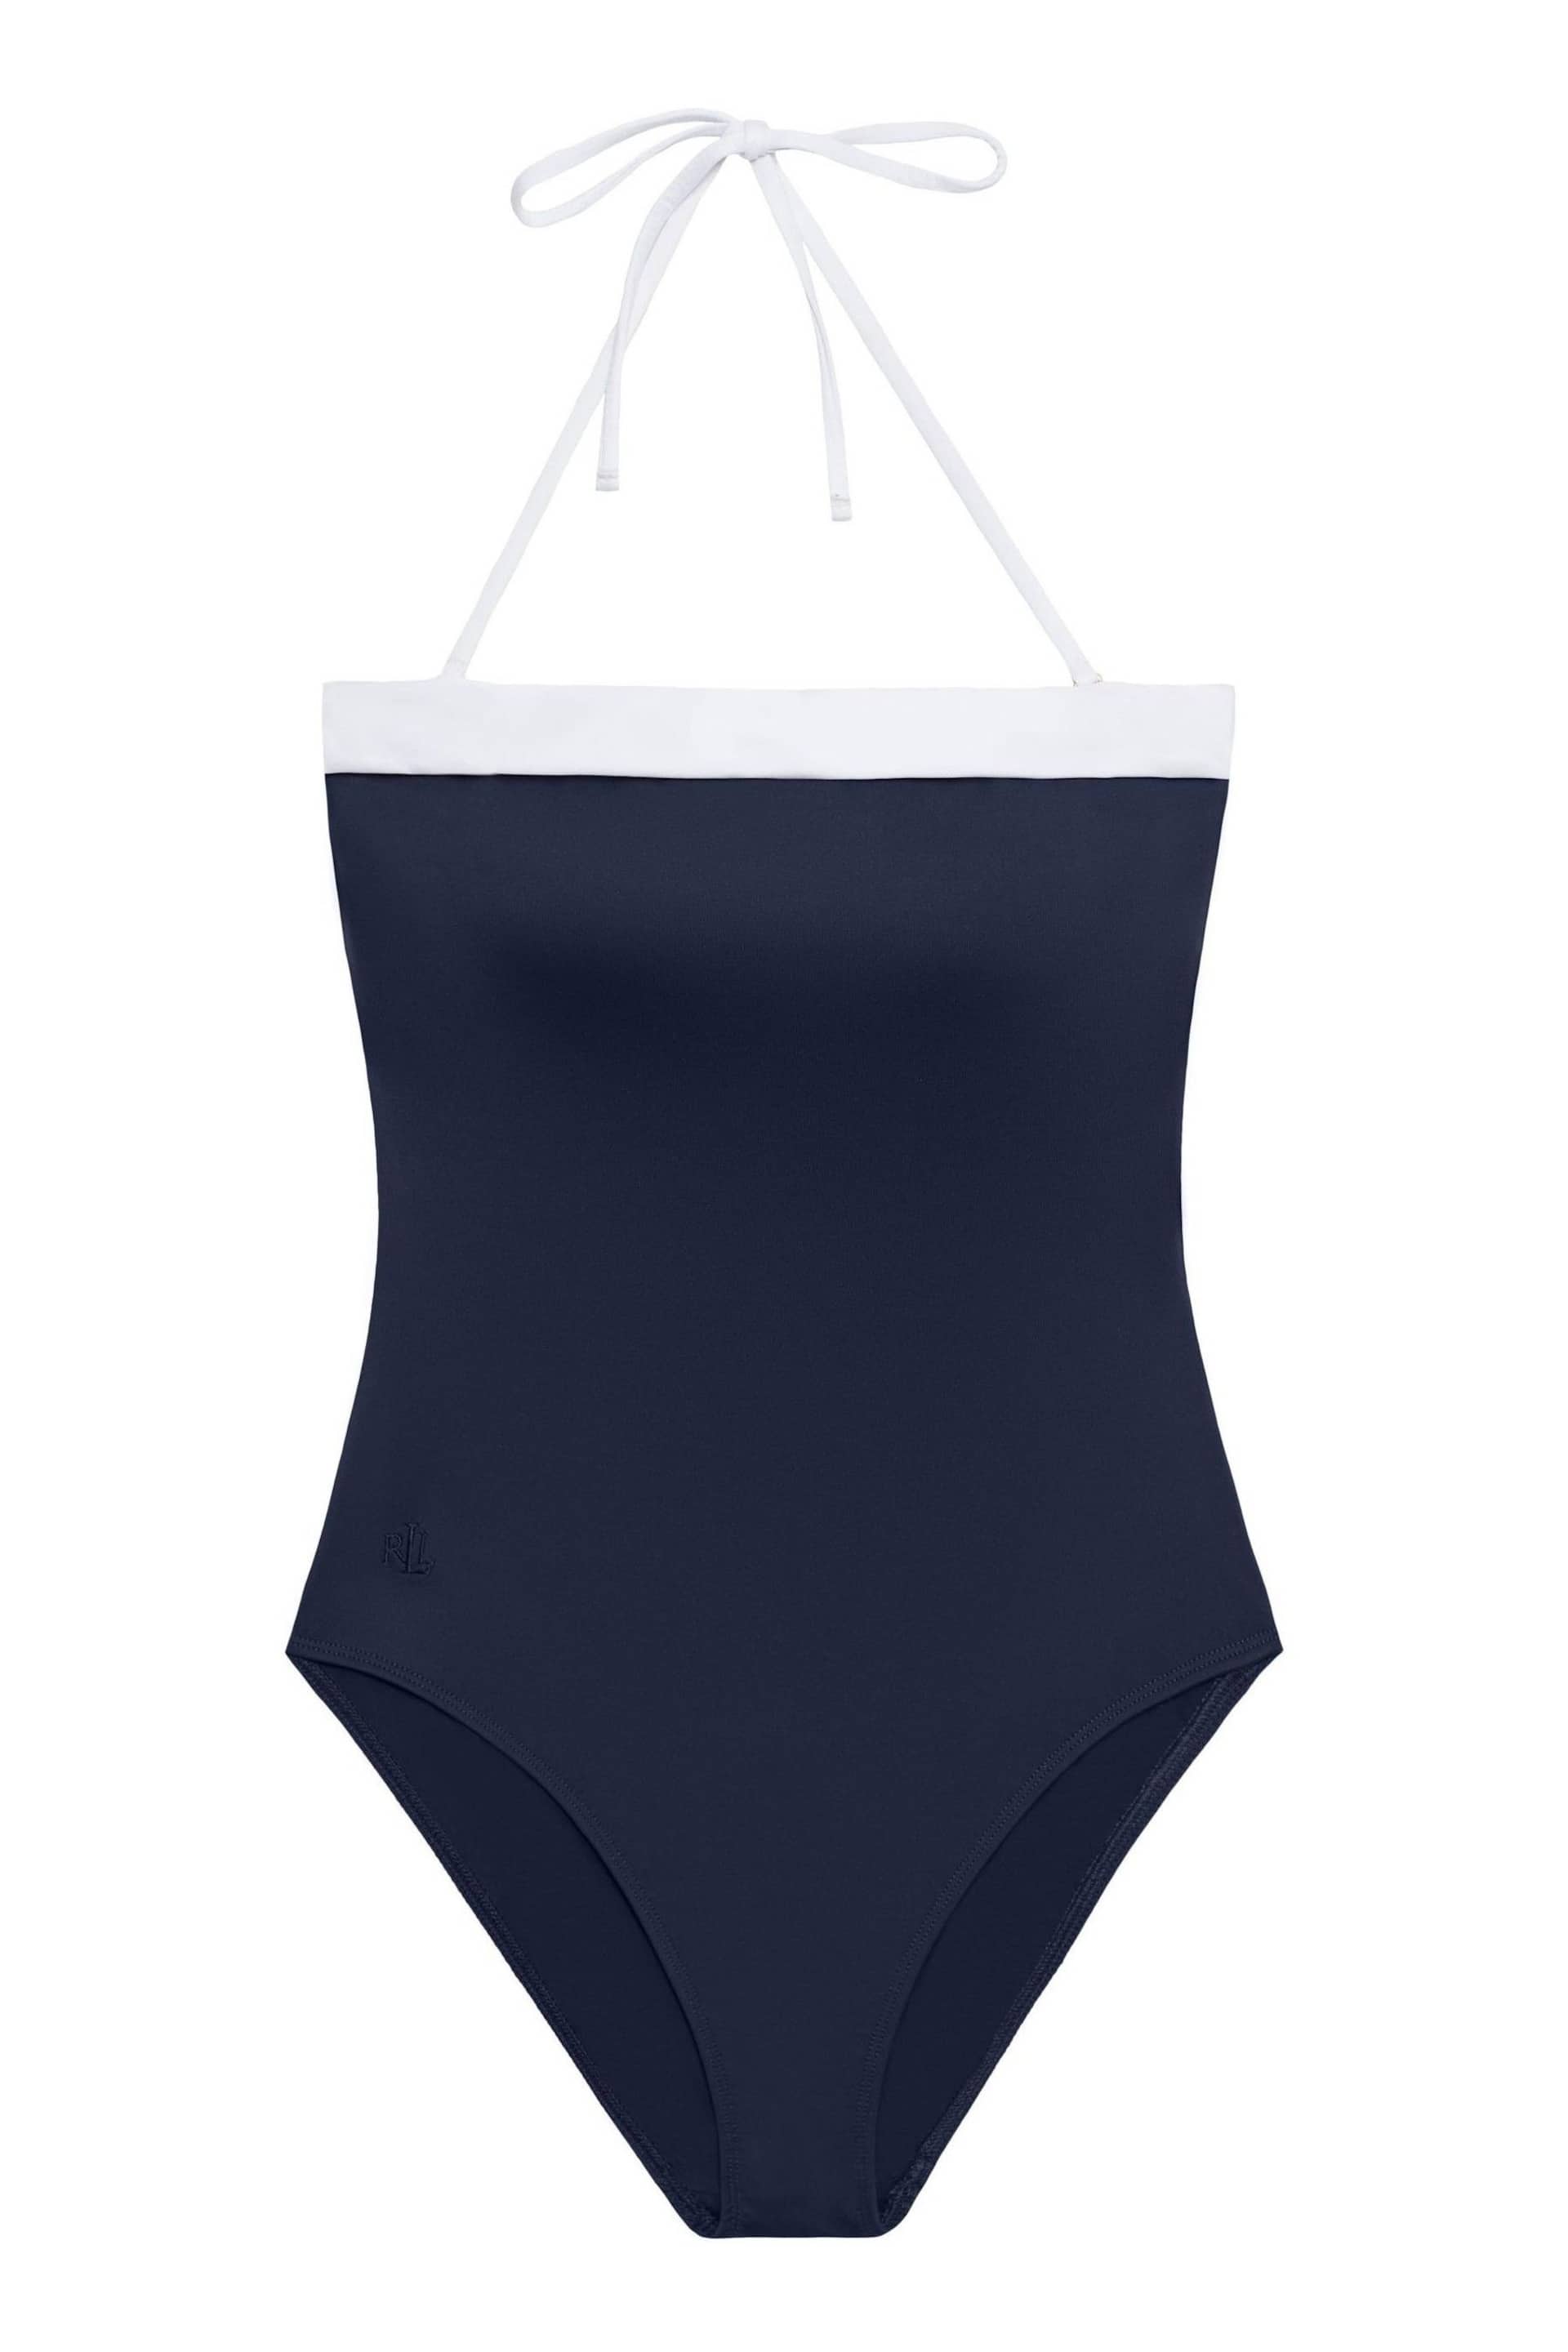 Lauren Ralph Lauren Blue Bel Air Modern Bandeau Swimsuit - Image 5 of 5